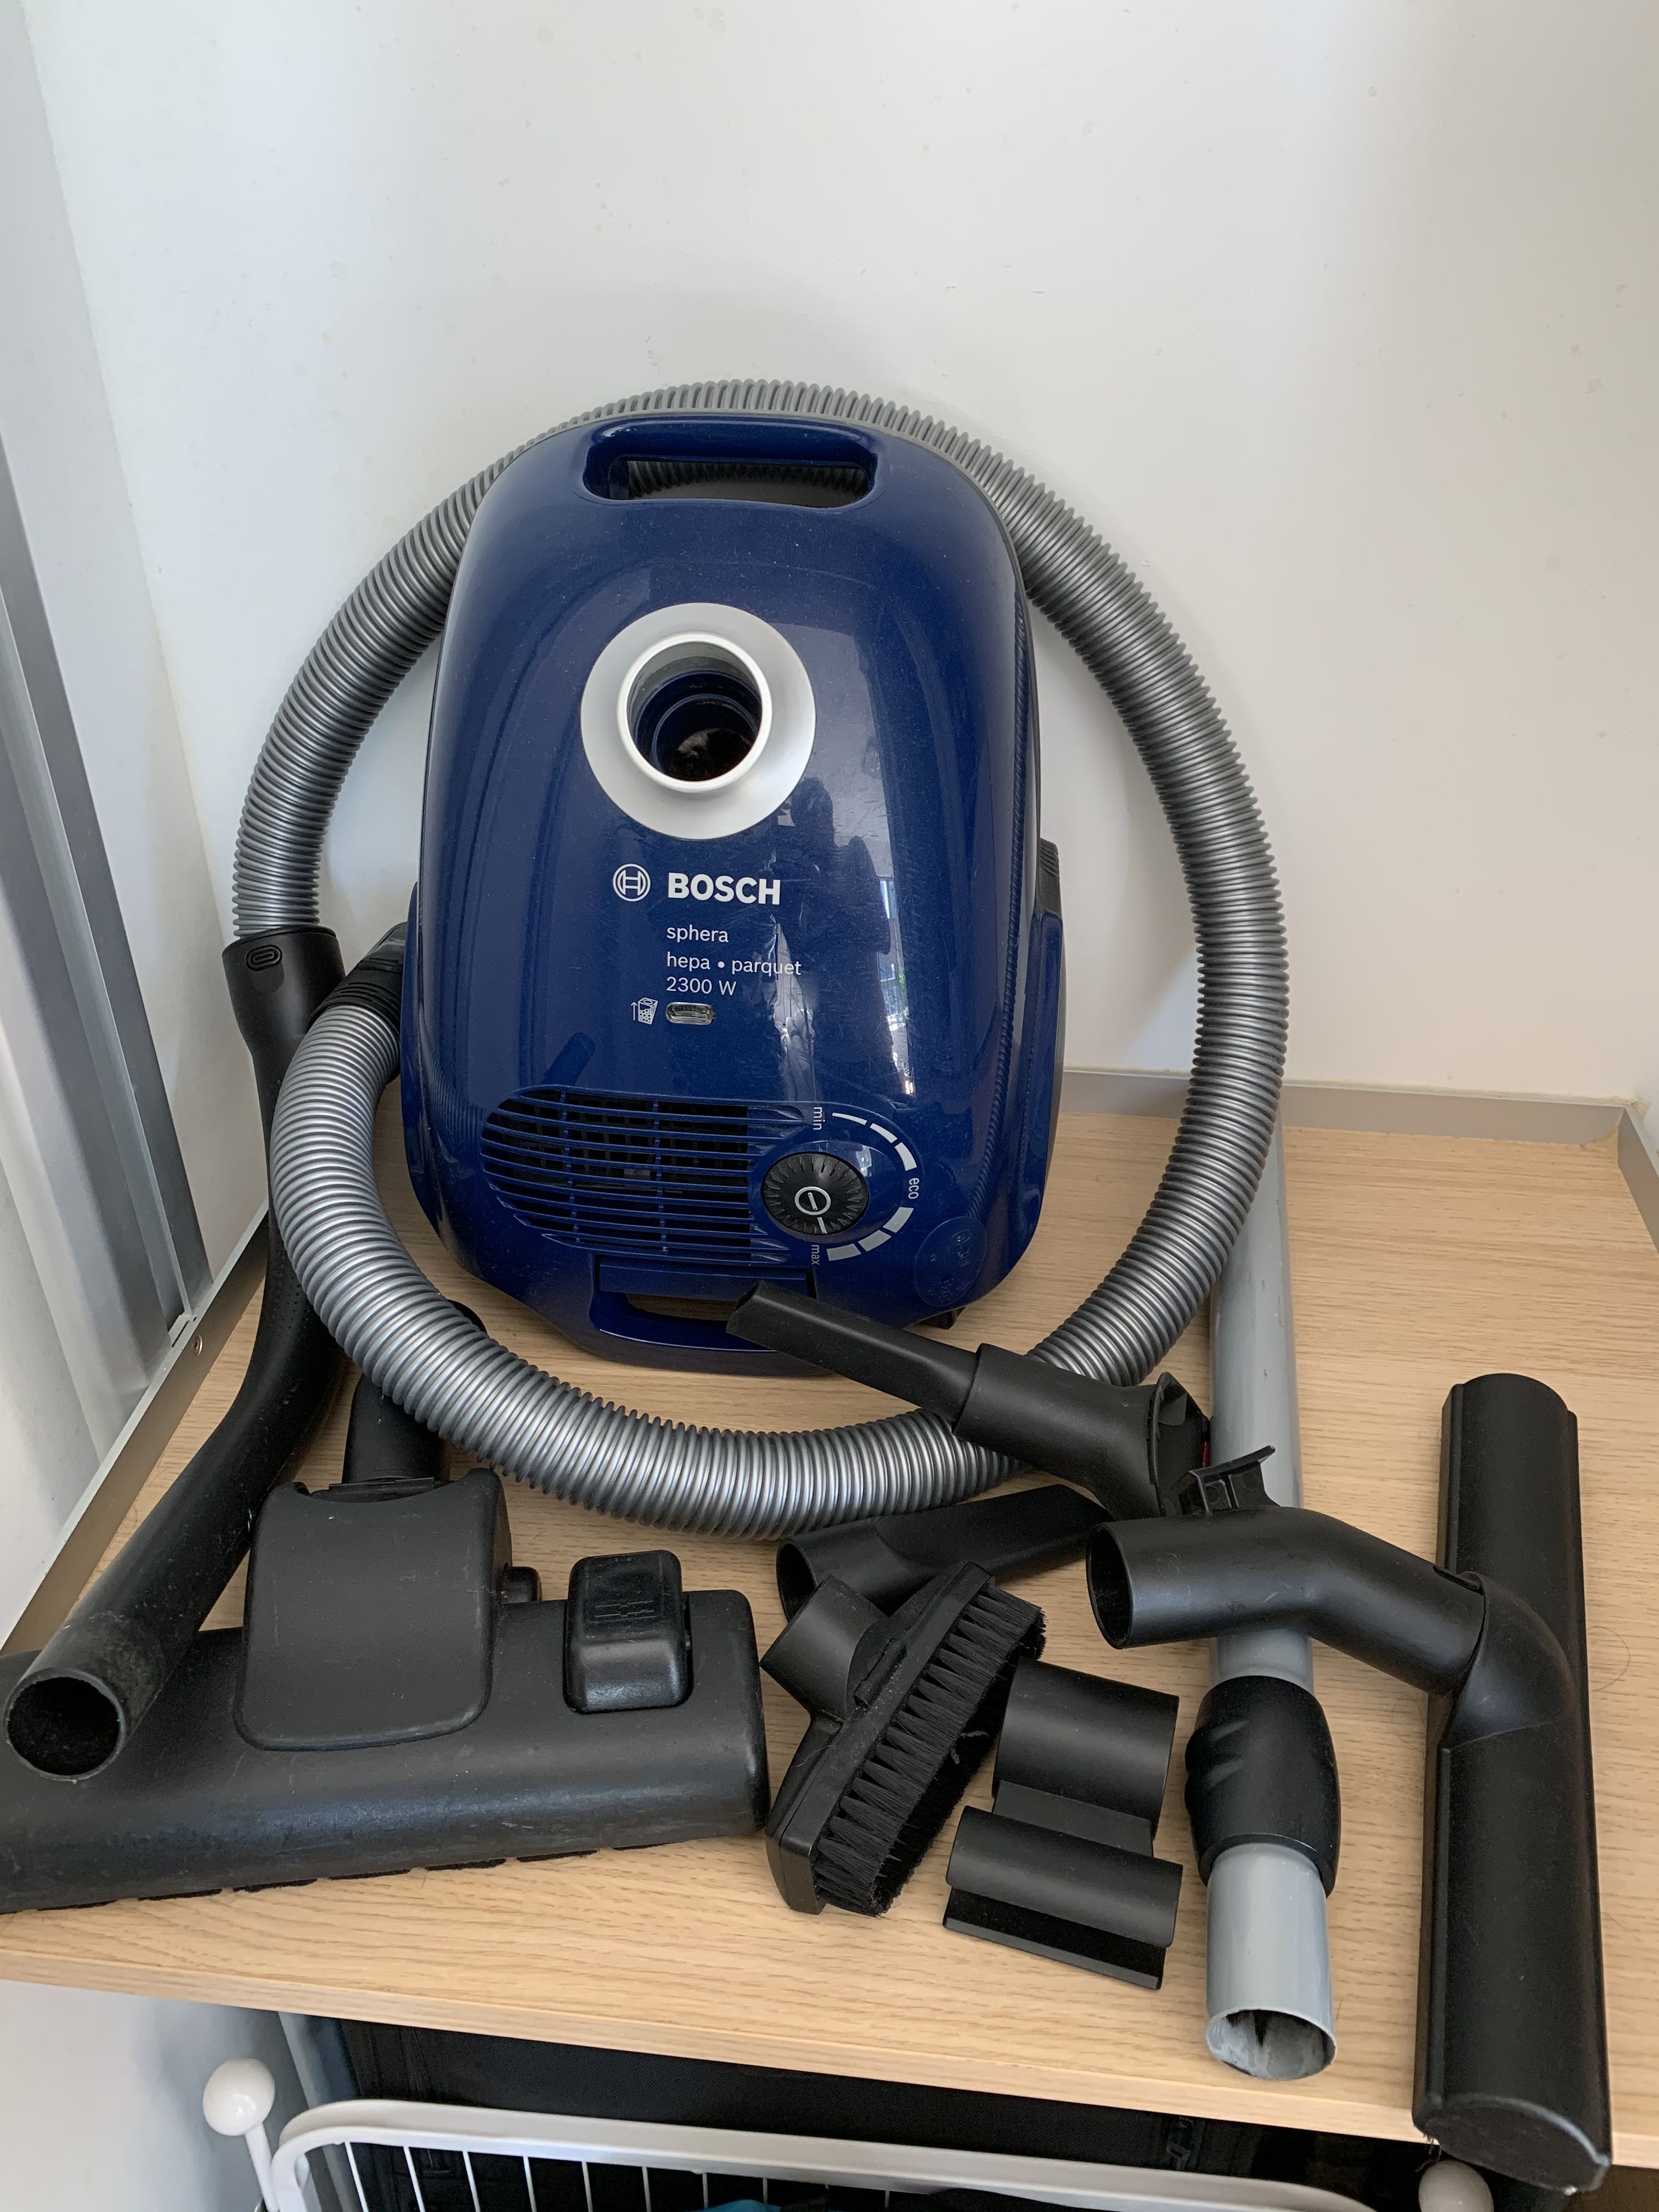 Nogen nå glans Bosch Sphera 2300w Hepa Parquet Hoover, TV & Home Appliances, Vacuum  Cleaner & Housekeeping on Carousell